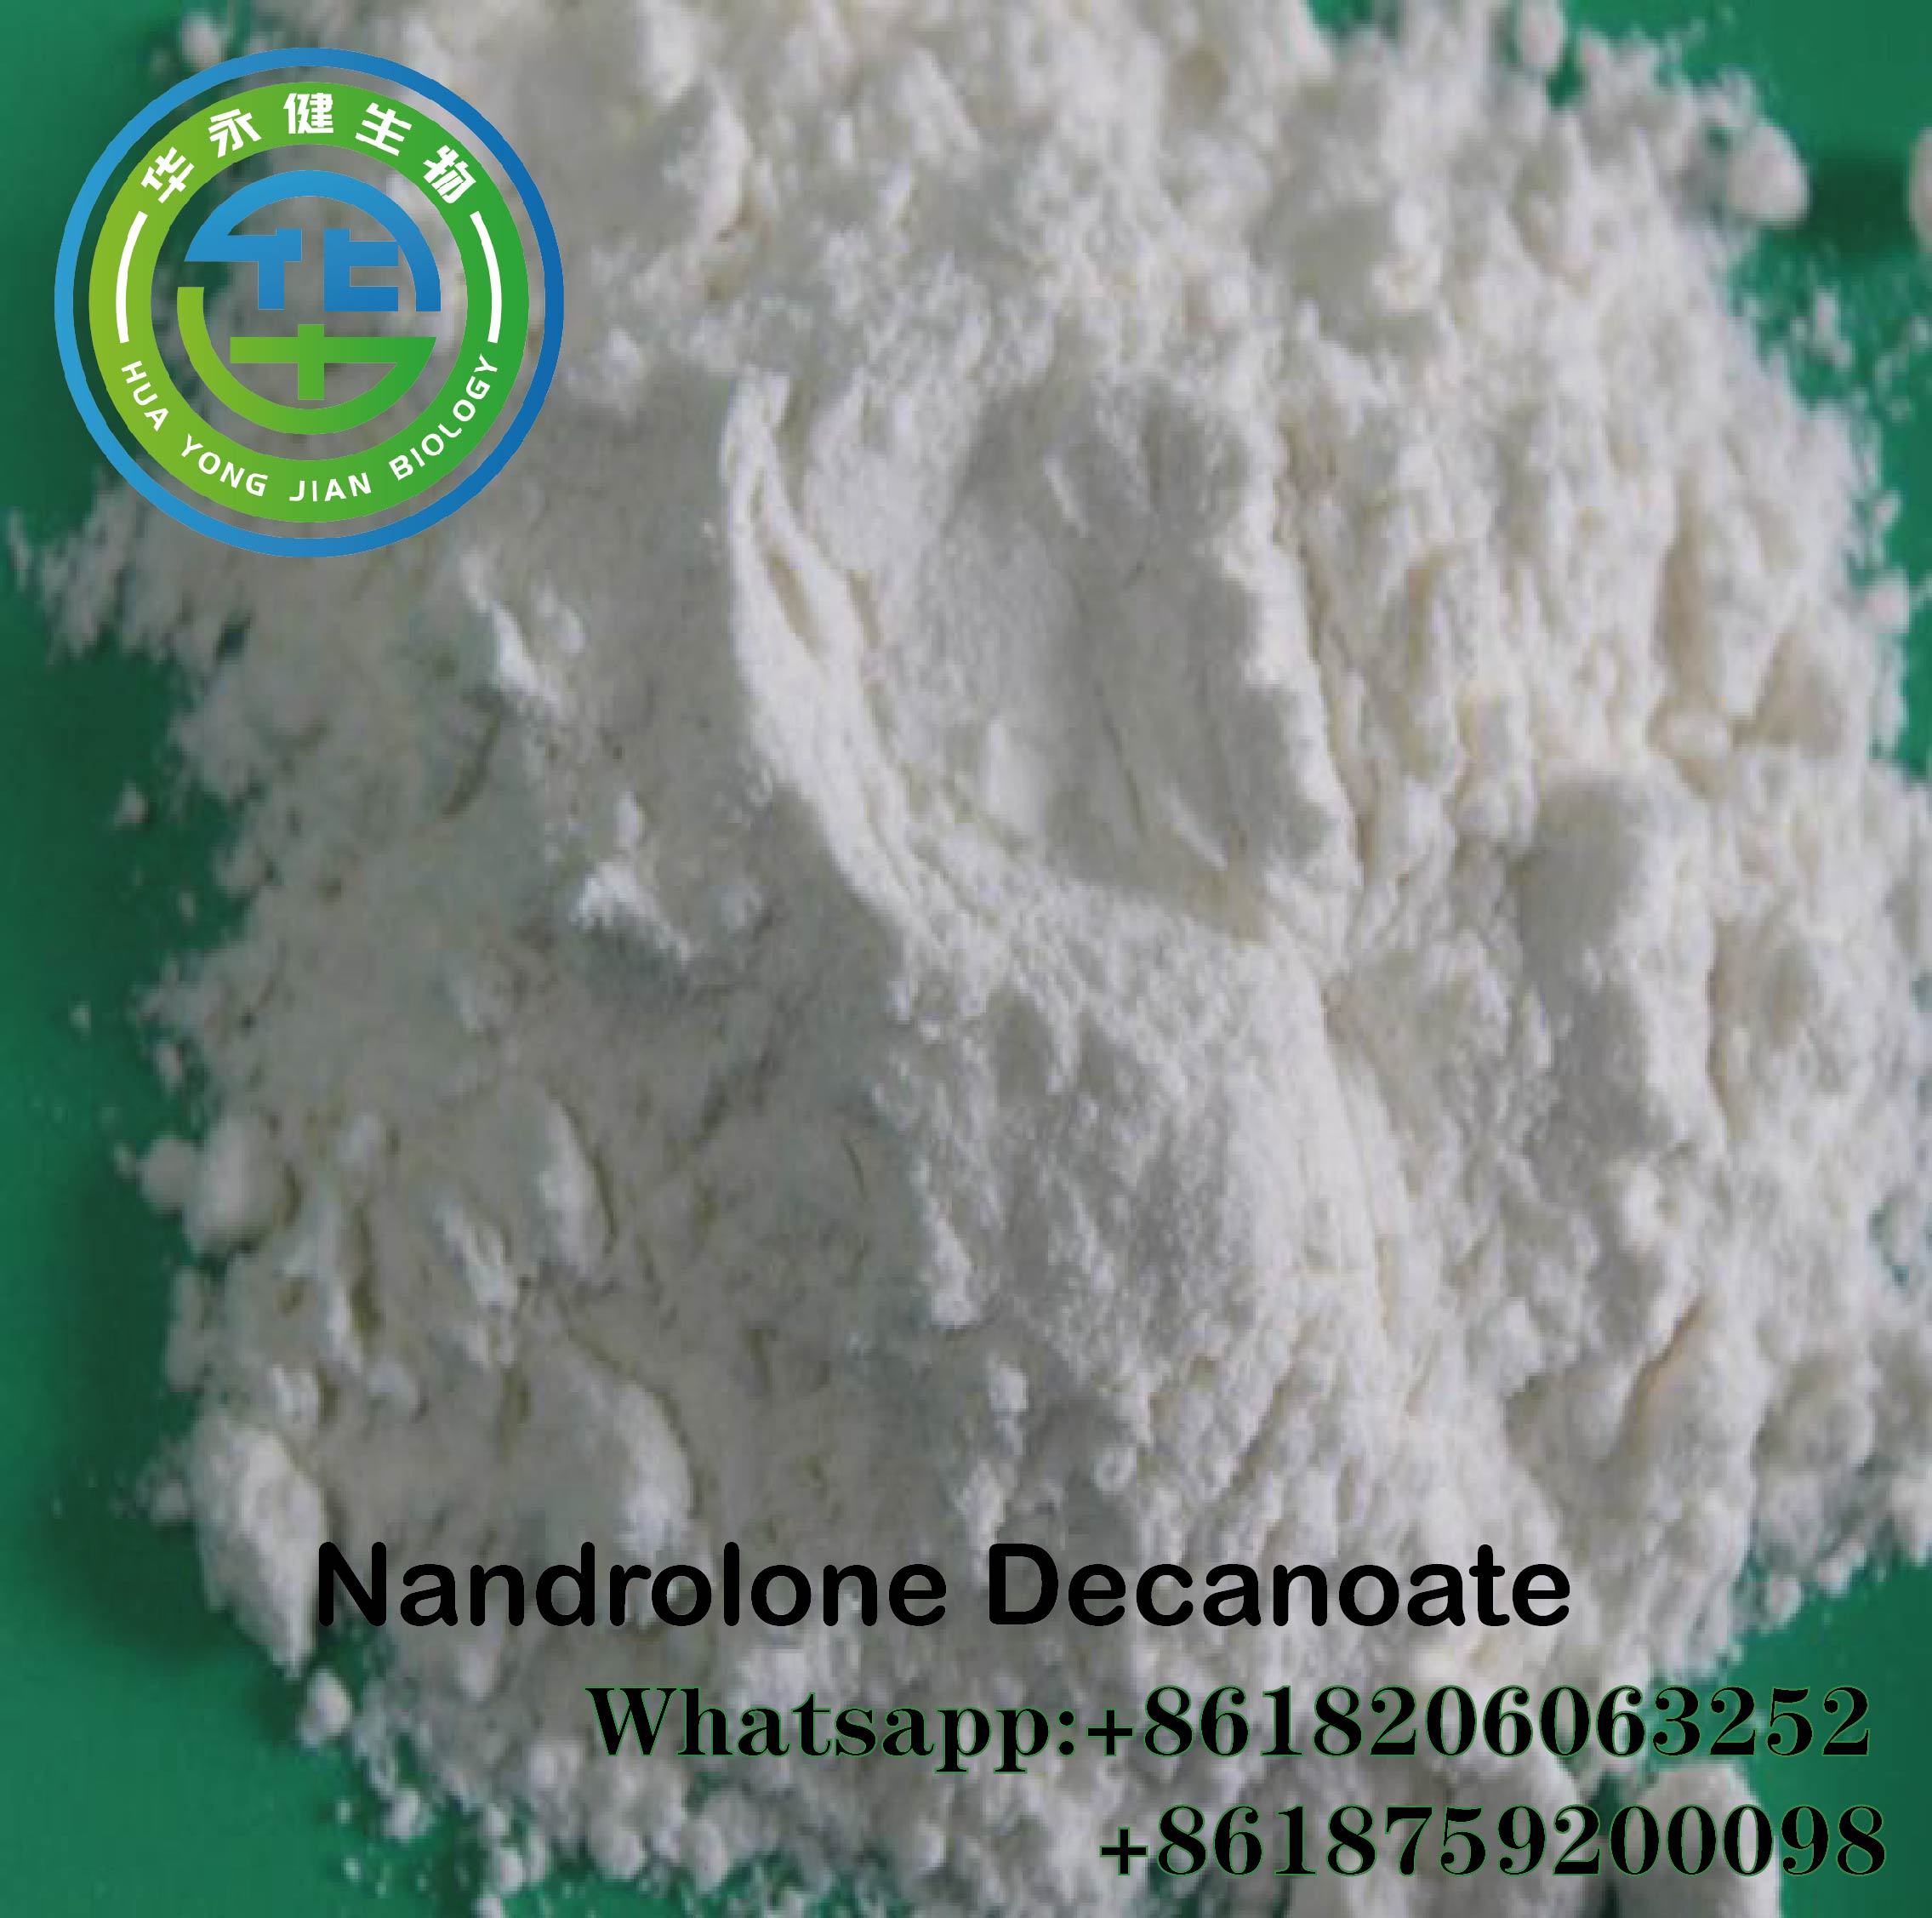 Darobolin Deca CasNO.360-70-3/DECA Anabolic Steroids Nandrolone Decanoate Powder Featured Image